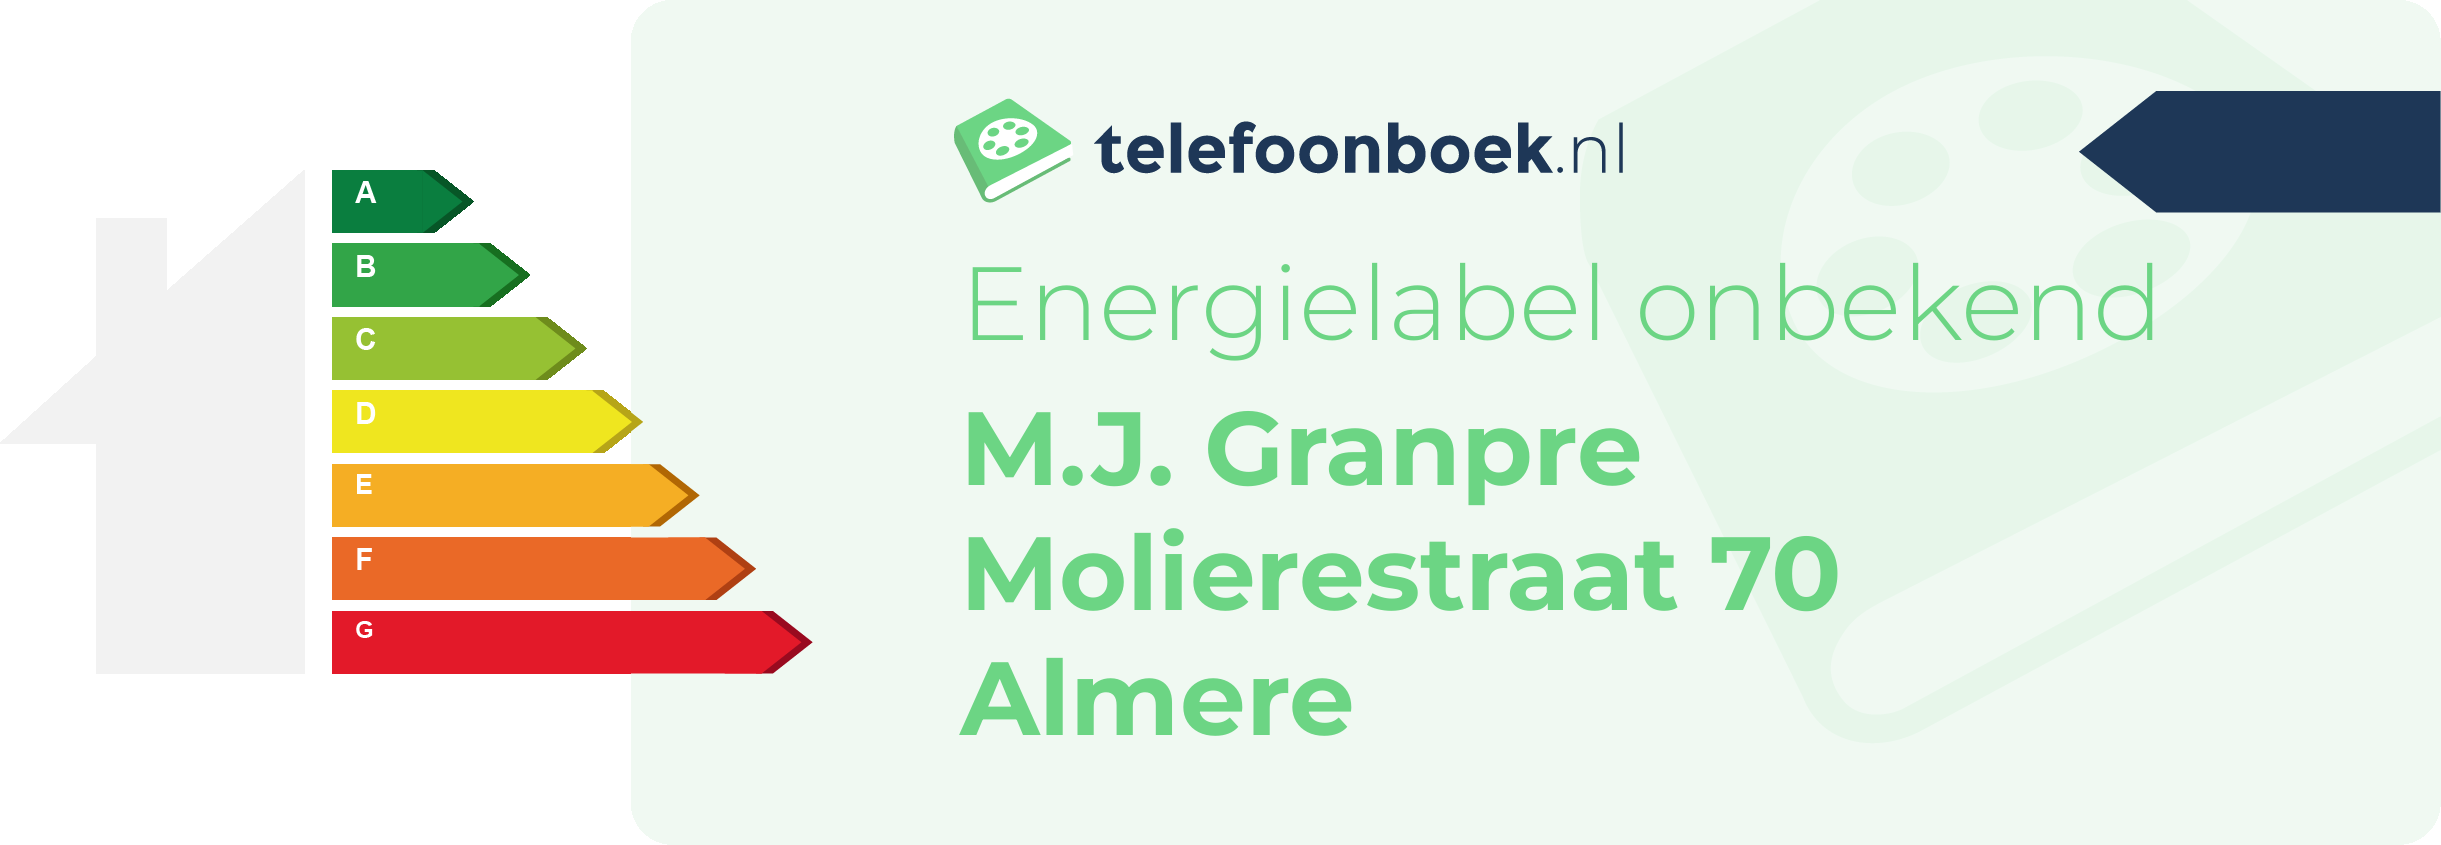 Energielabel M.J. Granpre Molierestraat 70 Almere